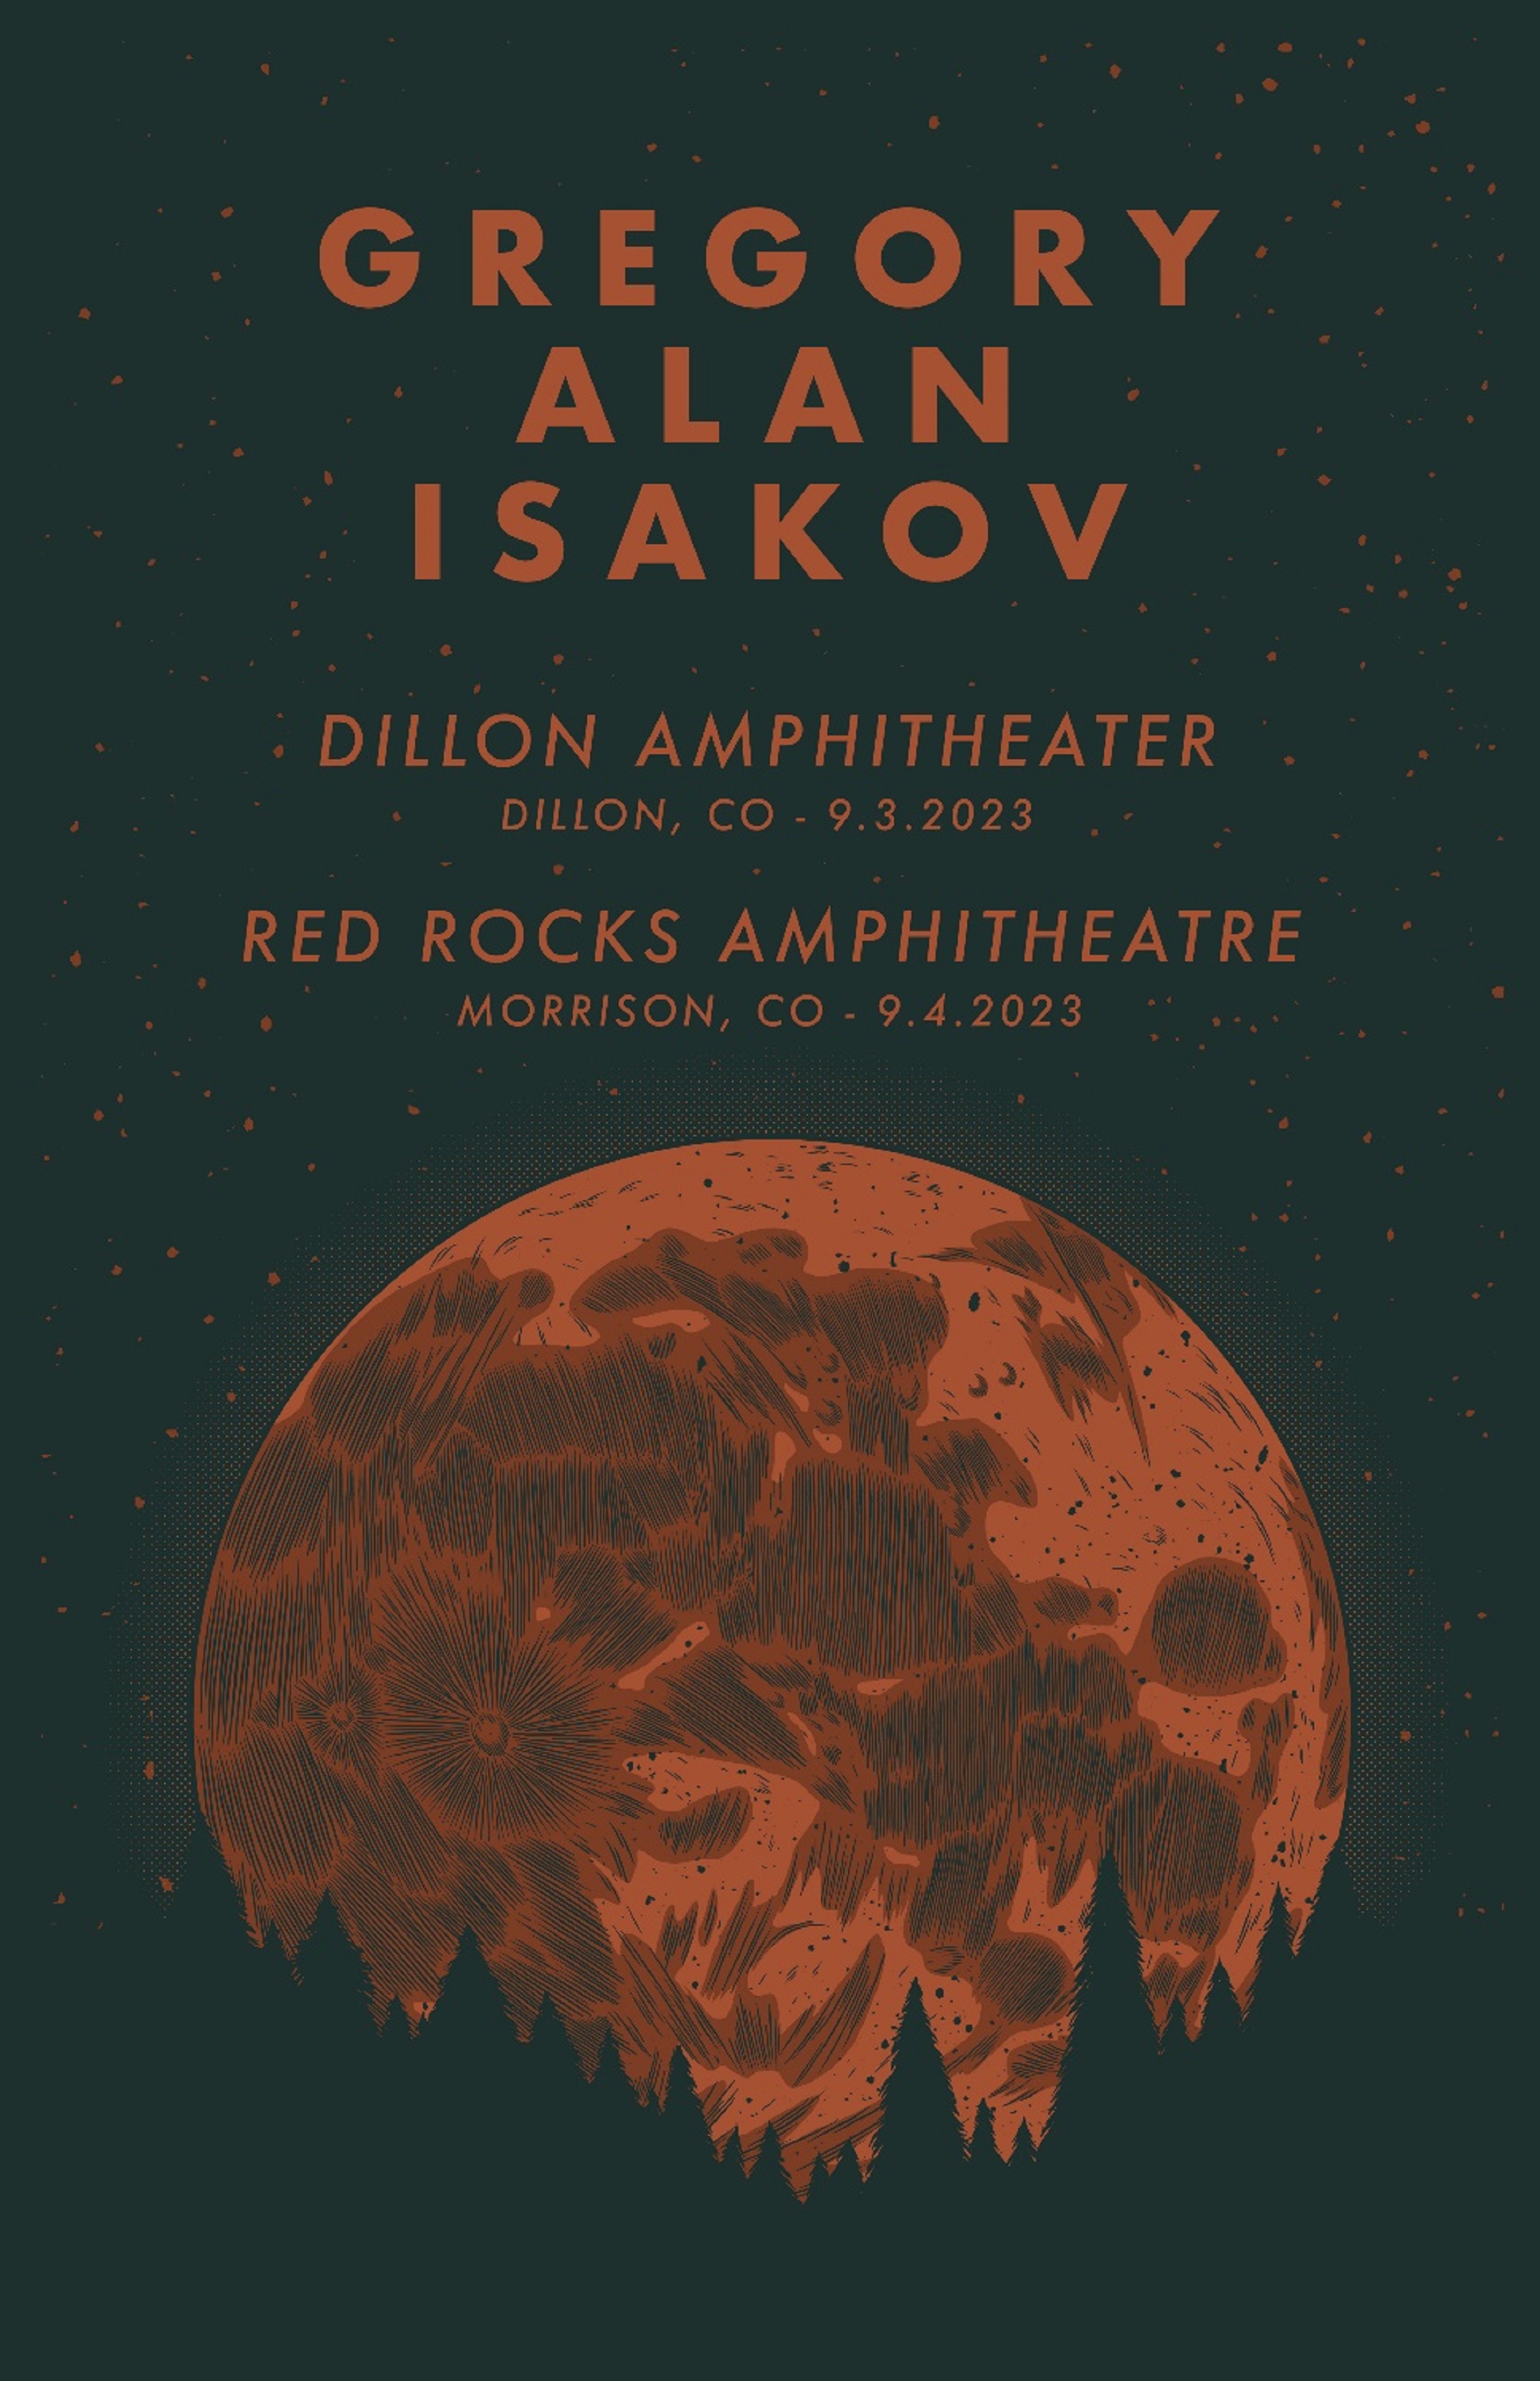 GREGORY ALAN ISAKOV Dillon Amphitheater Sept 3, 2023 & Red Rocks